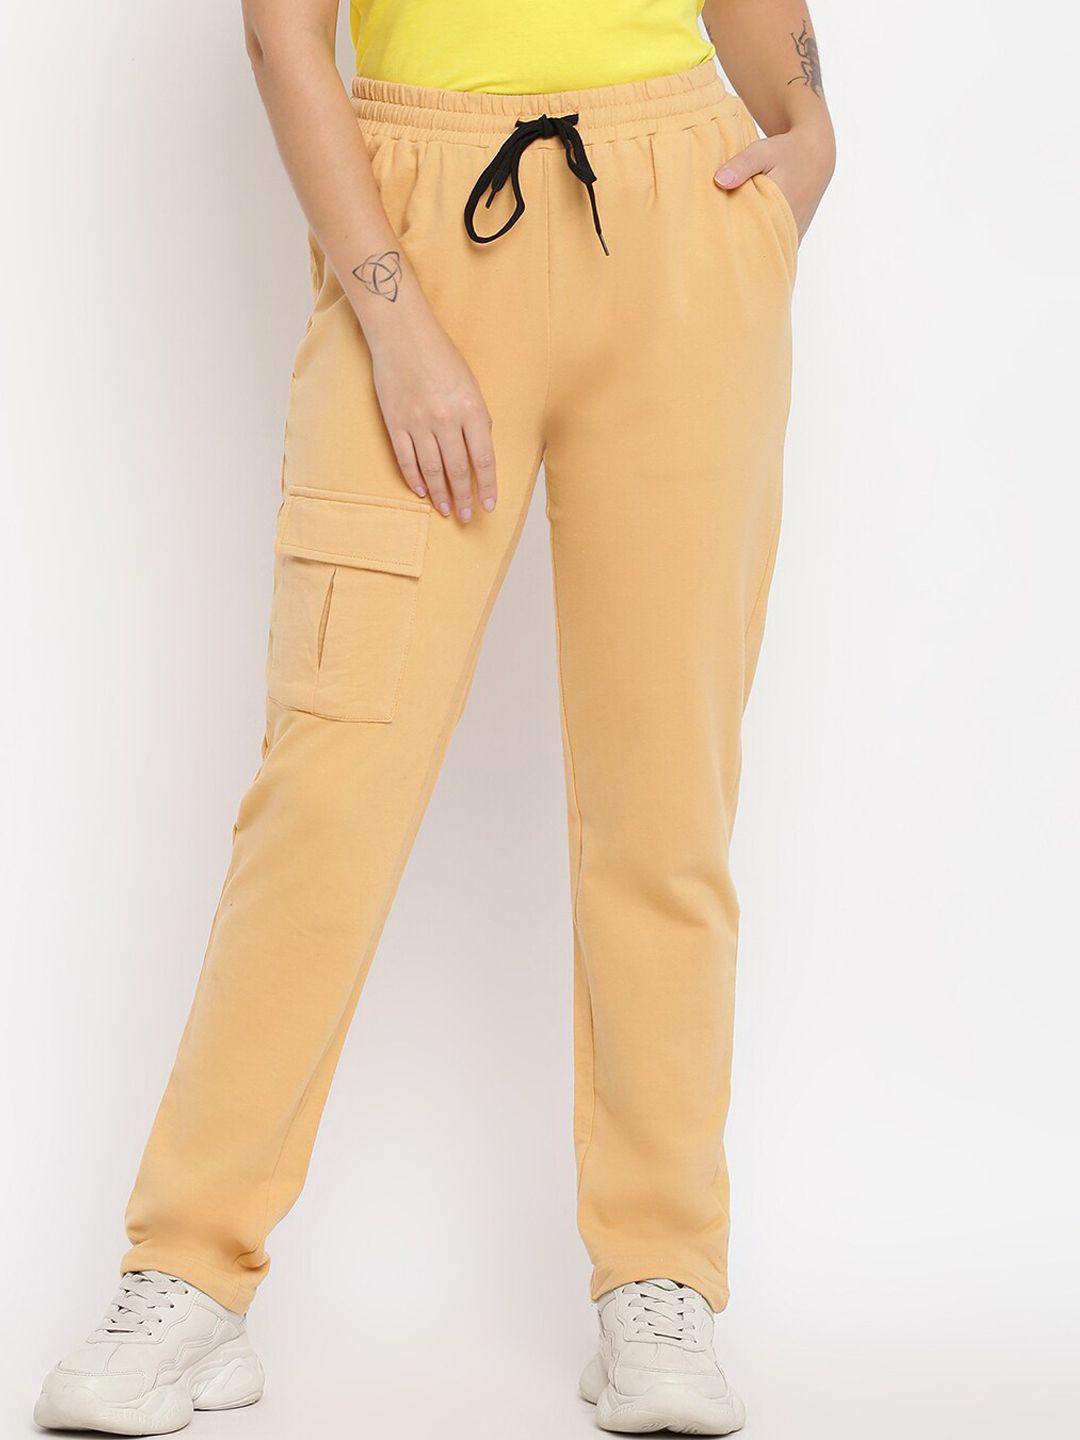 abof women peach-coloured slim fit trousers